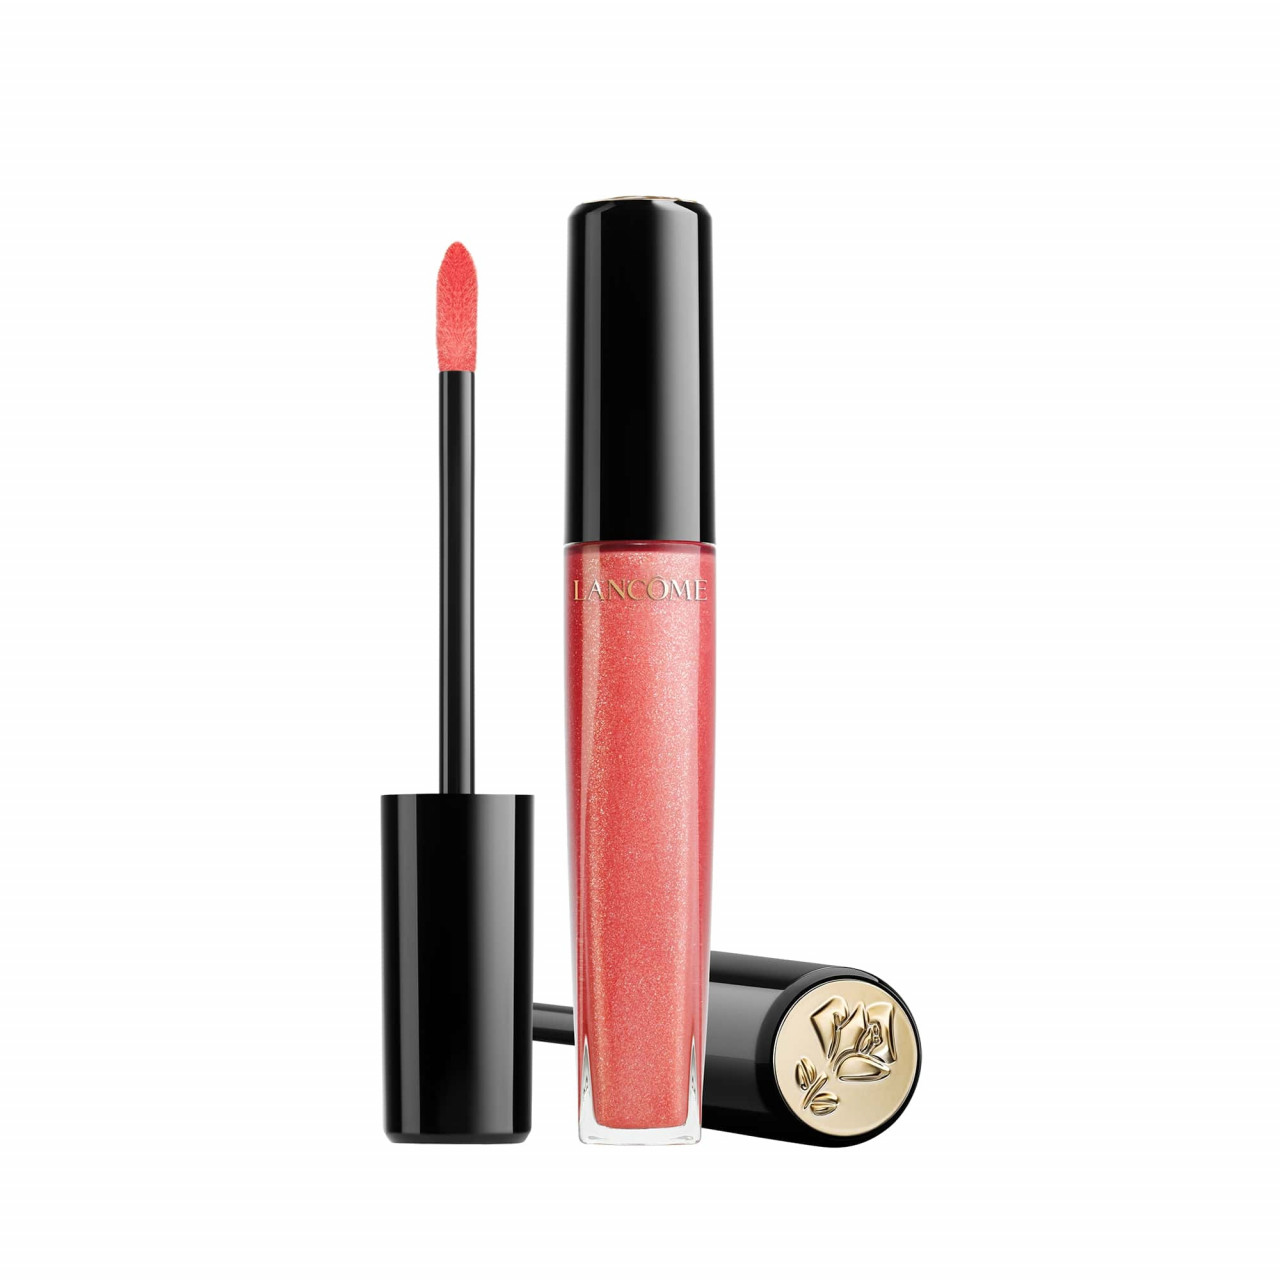 Lancôme - Absolue Lips Gloss Sheer - 